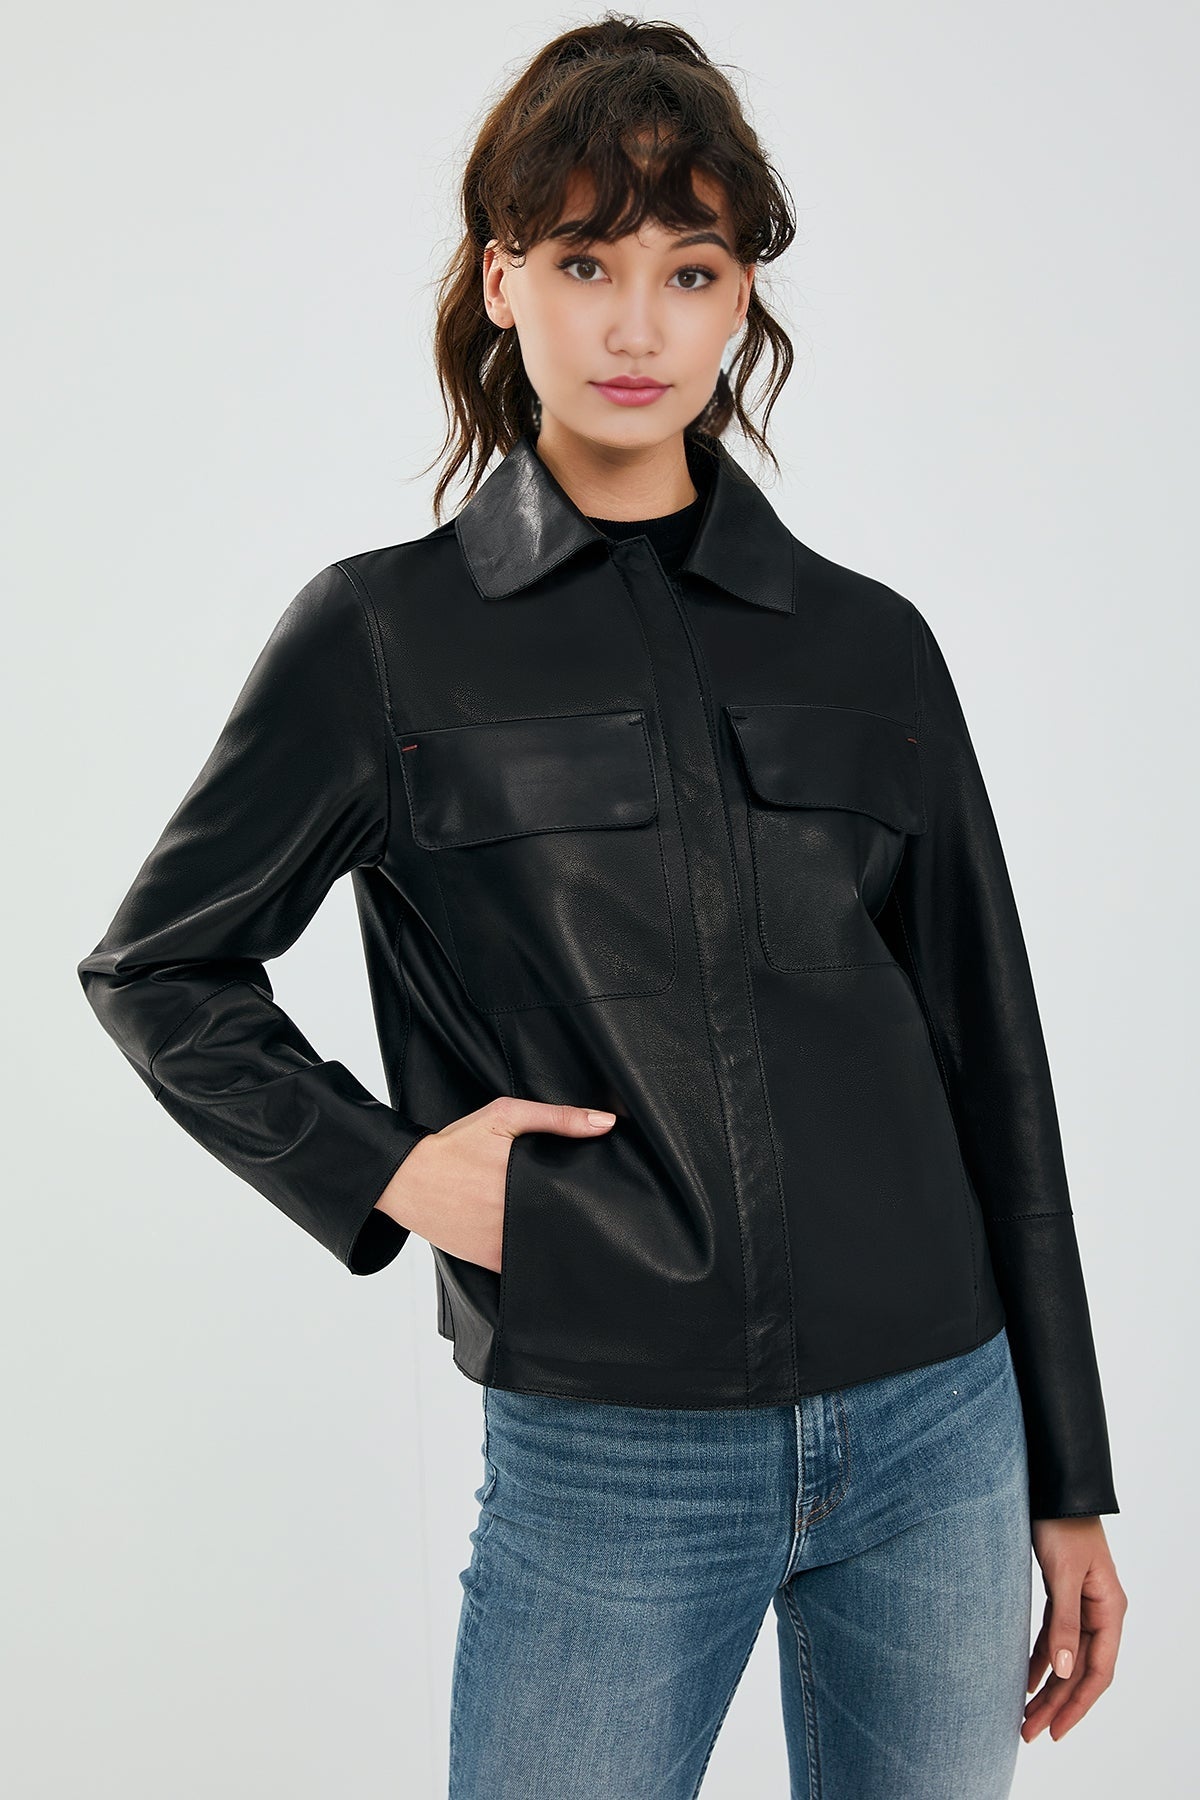 Jasmine Black Women's Leather Jacket